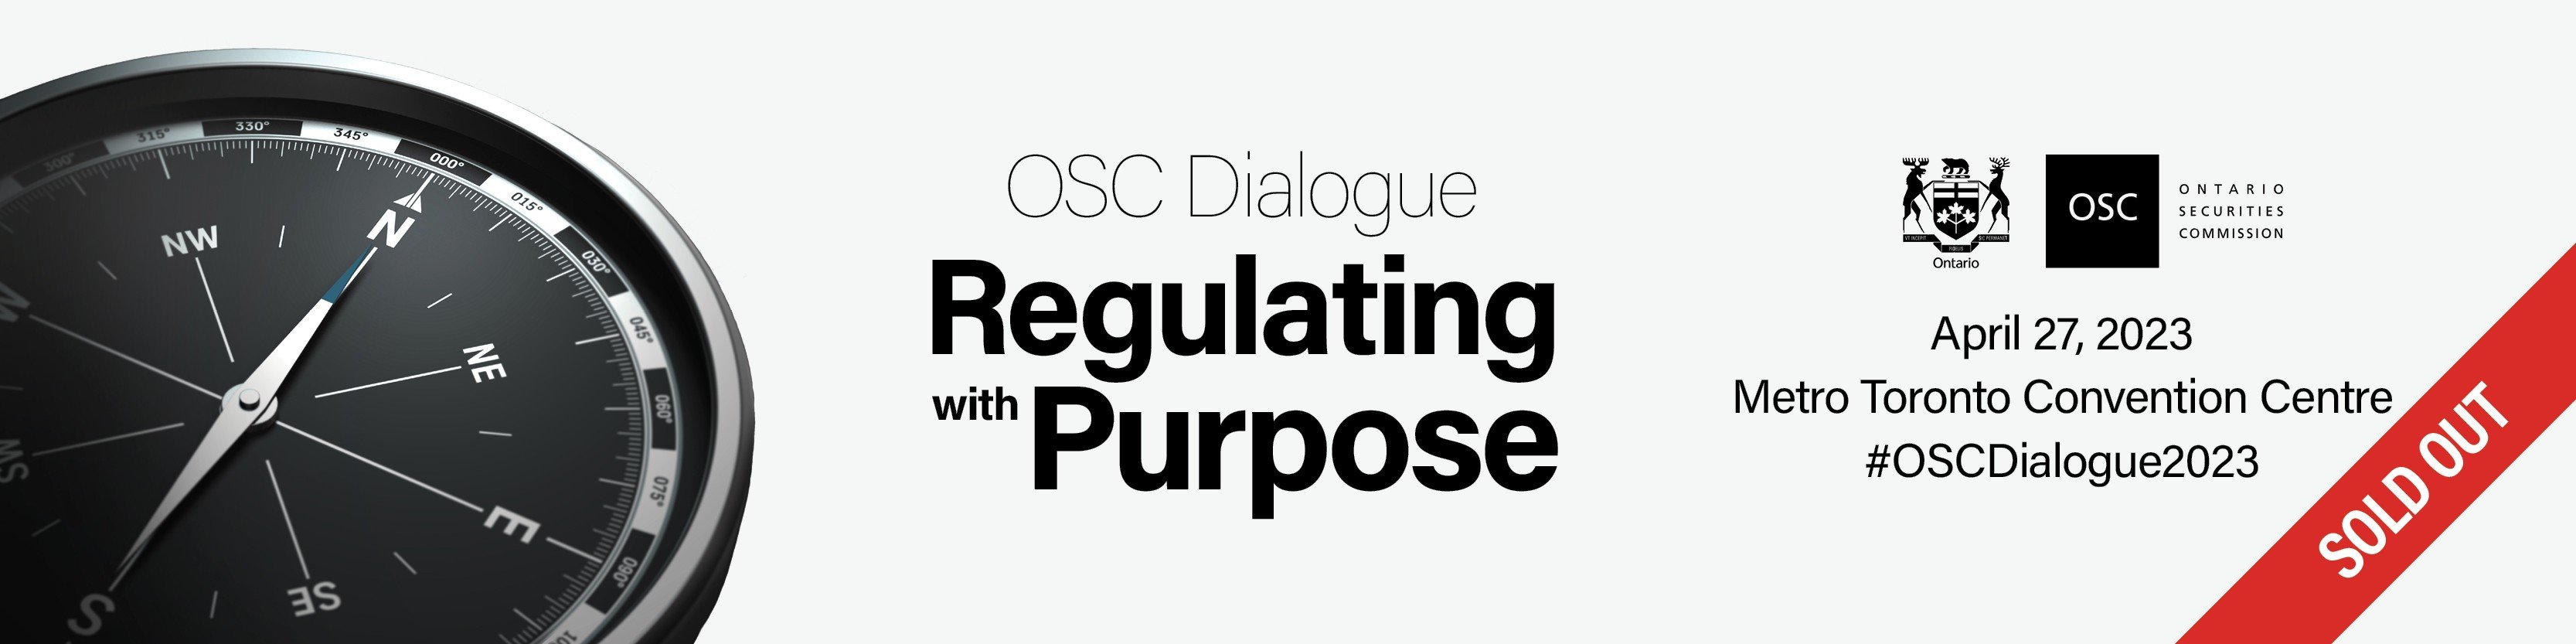 OSC Dialogue 2023 Regulating with Purpose. April 27, 2023 at the Toronto Metropolitan Convention Centre. Use hashtag #OSCDialogue2023.